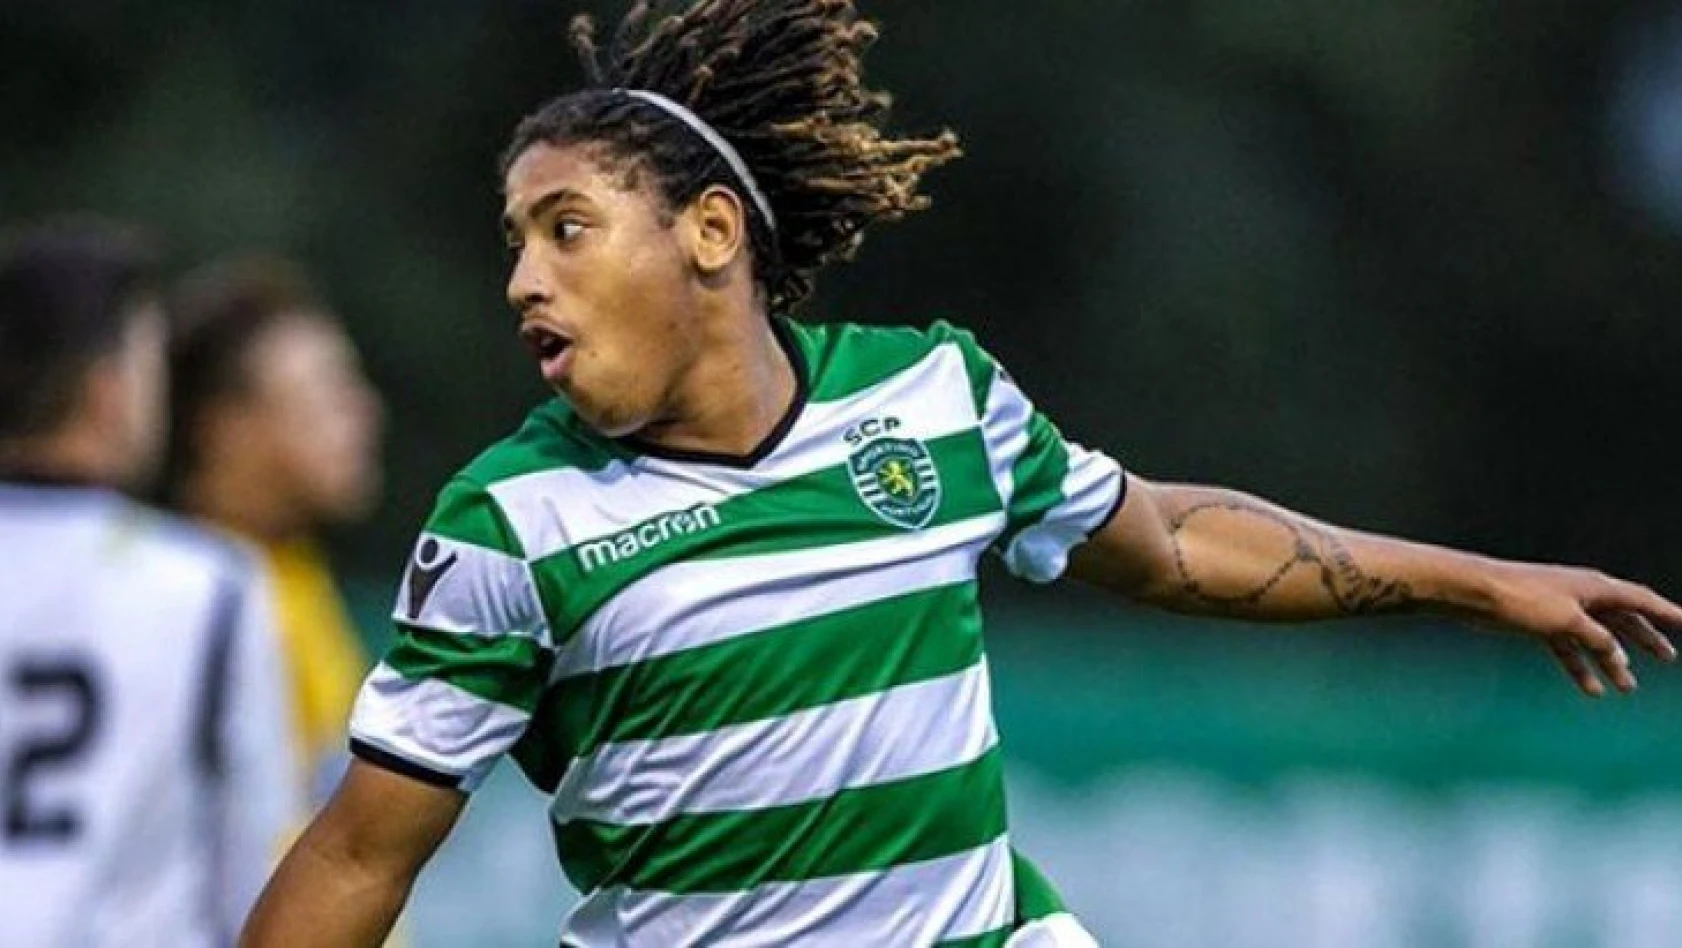 Sporting'in genç futbolcusu Bruno Tavares göğsünden vuruldu